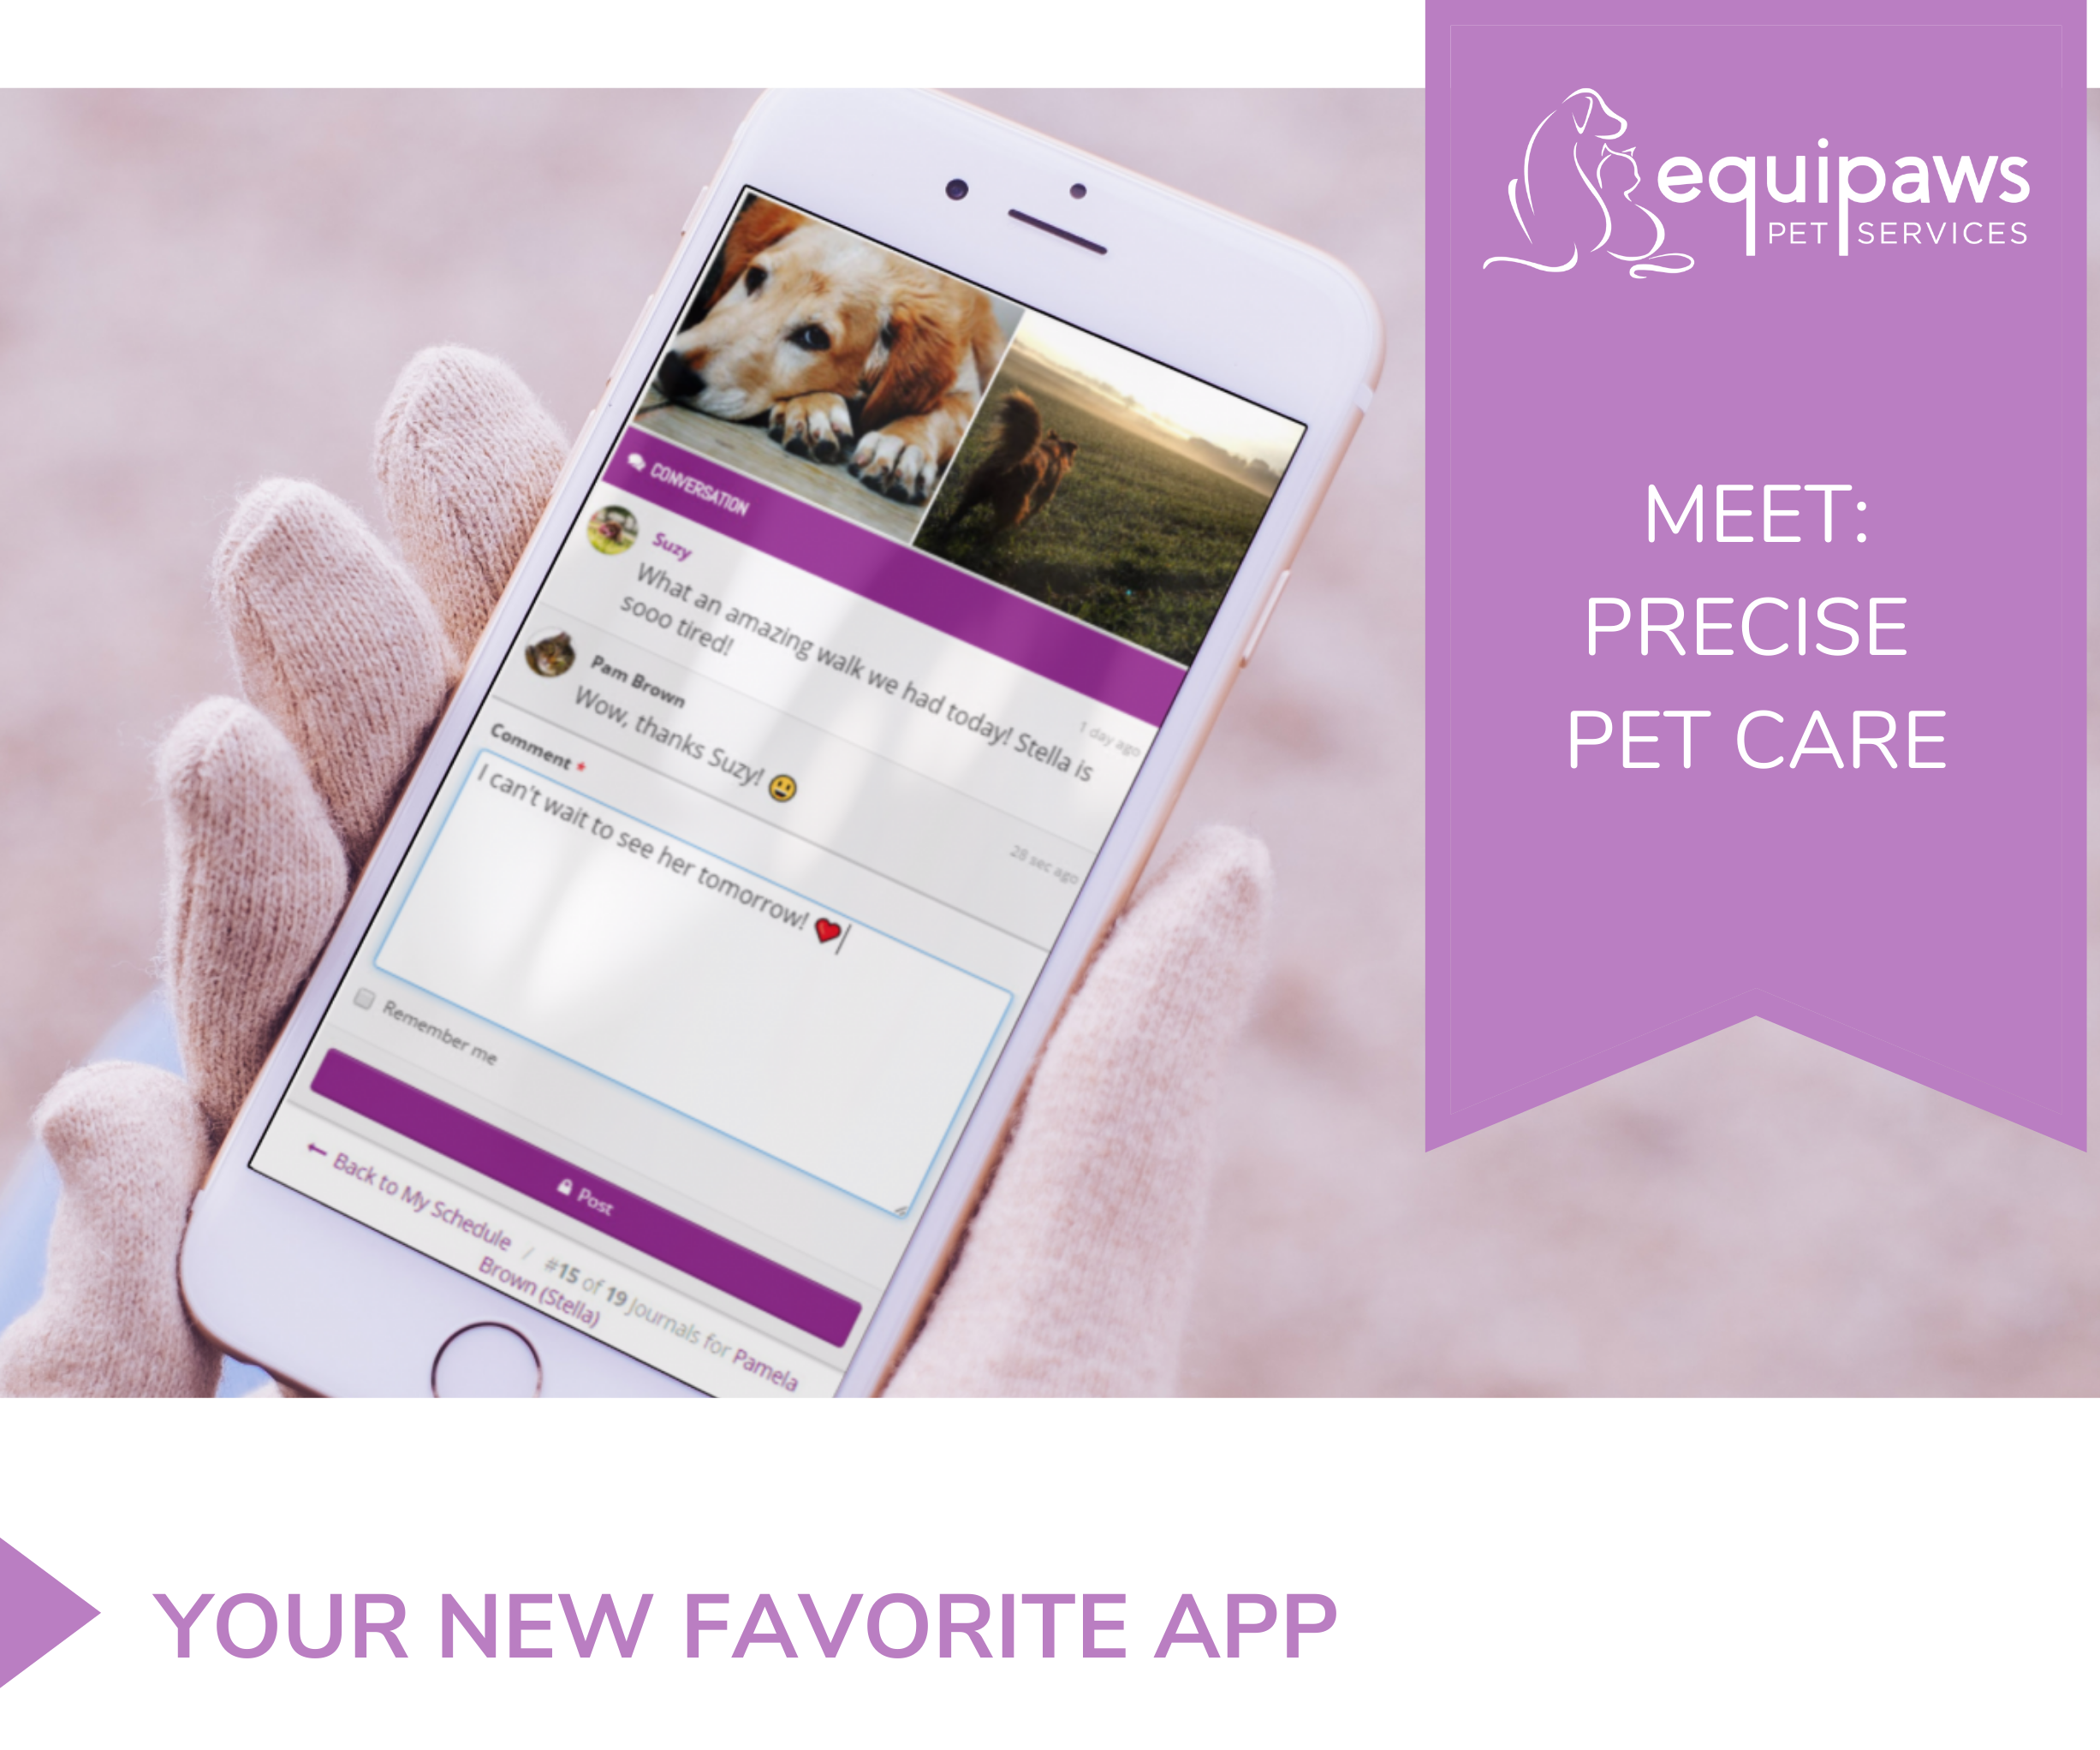 Precise Pet Care Equipaws Pet Services